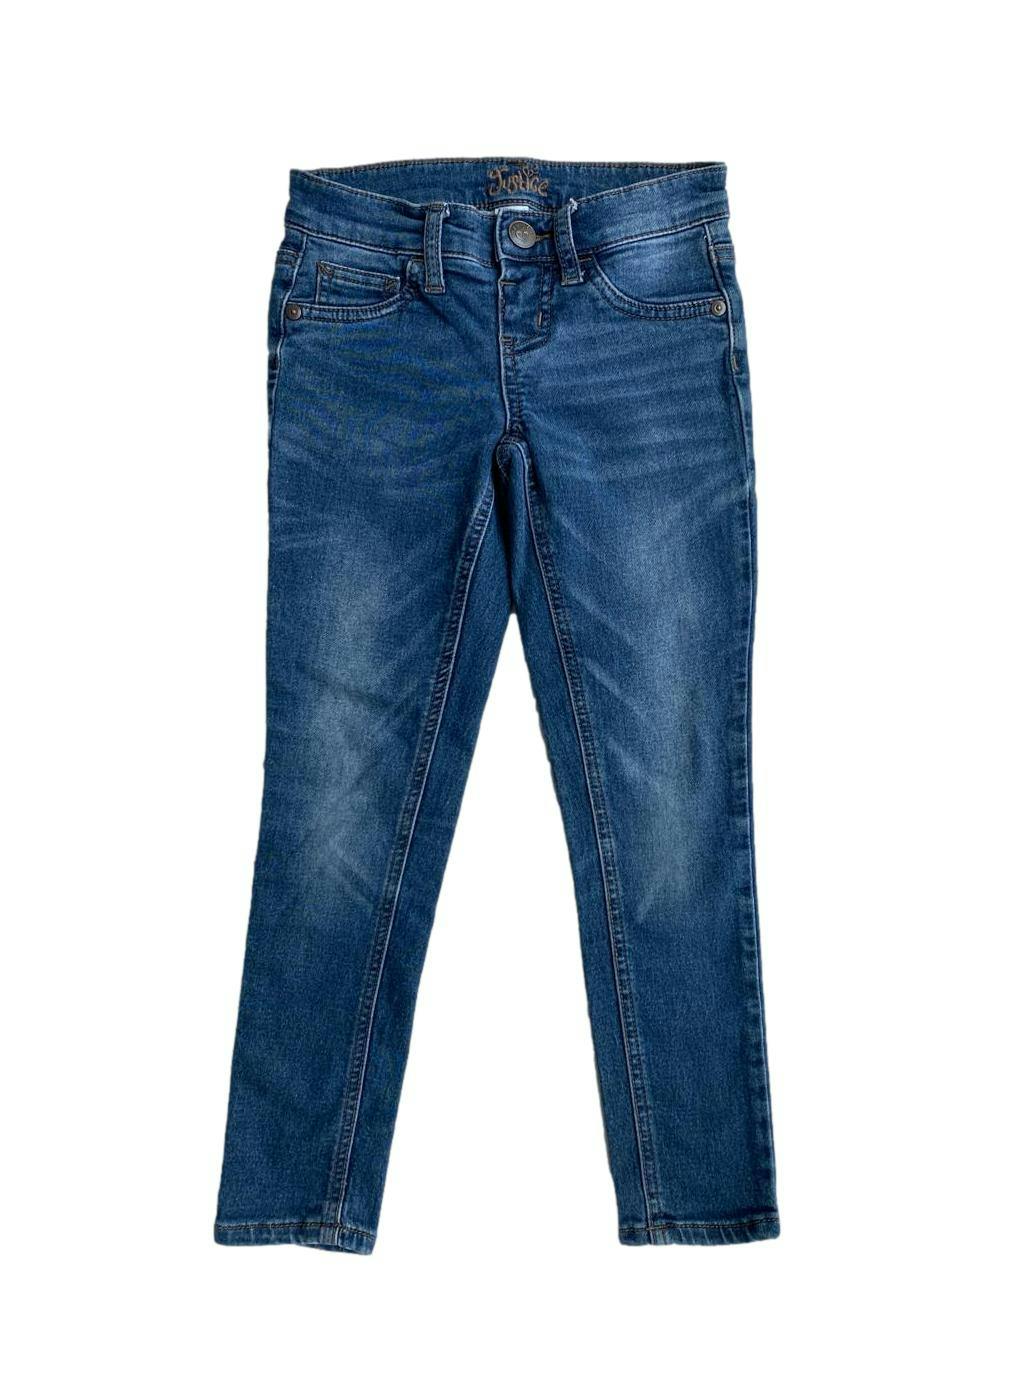 Pantalon jean azul, stretch. 76% algodón - Justice